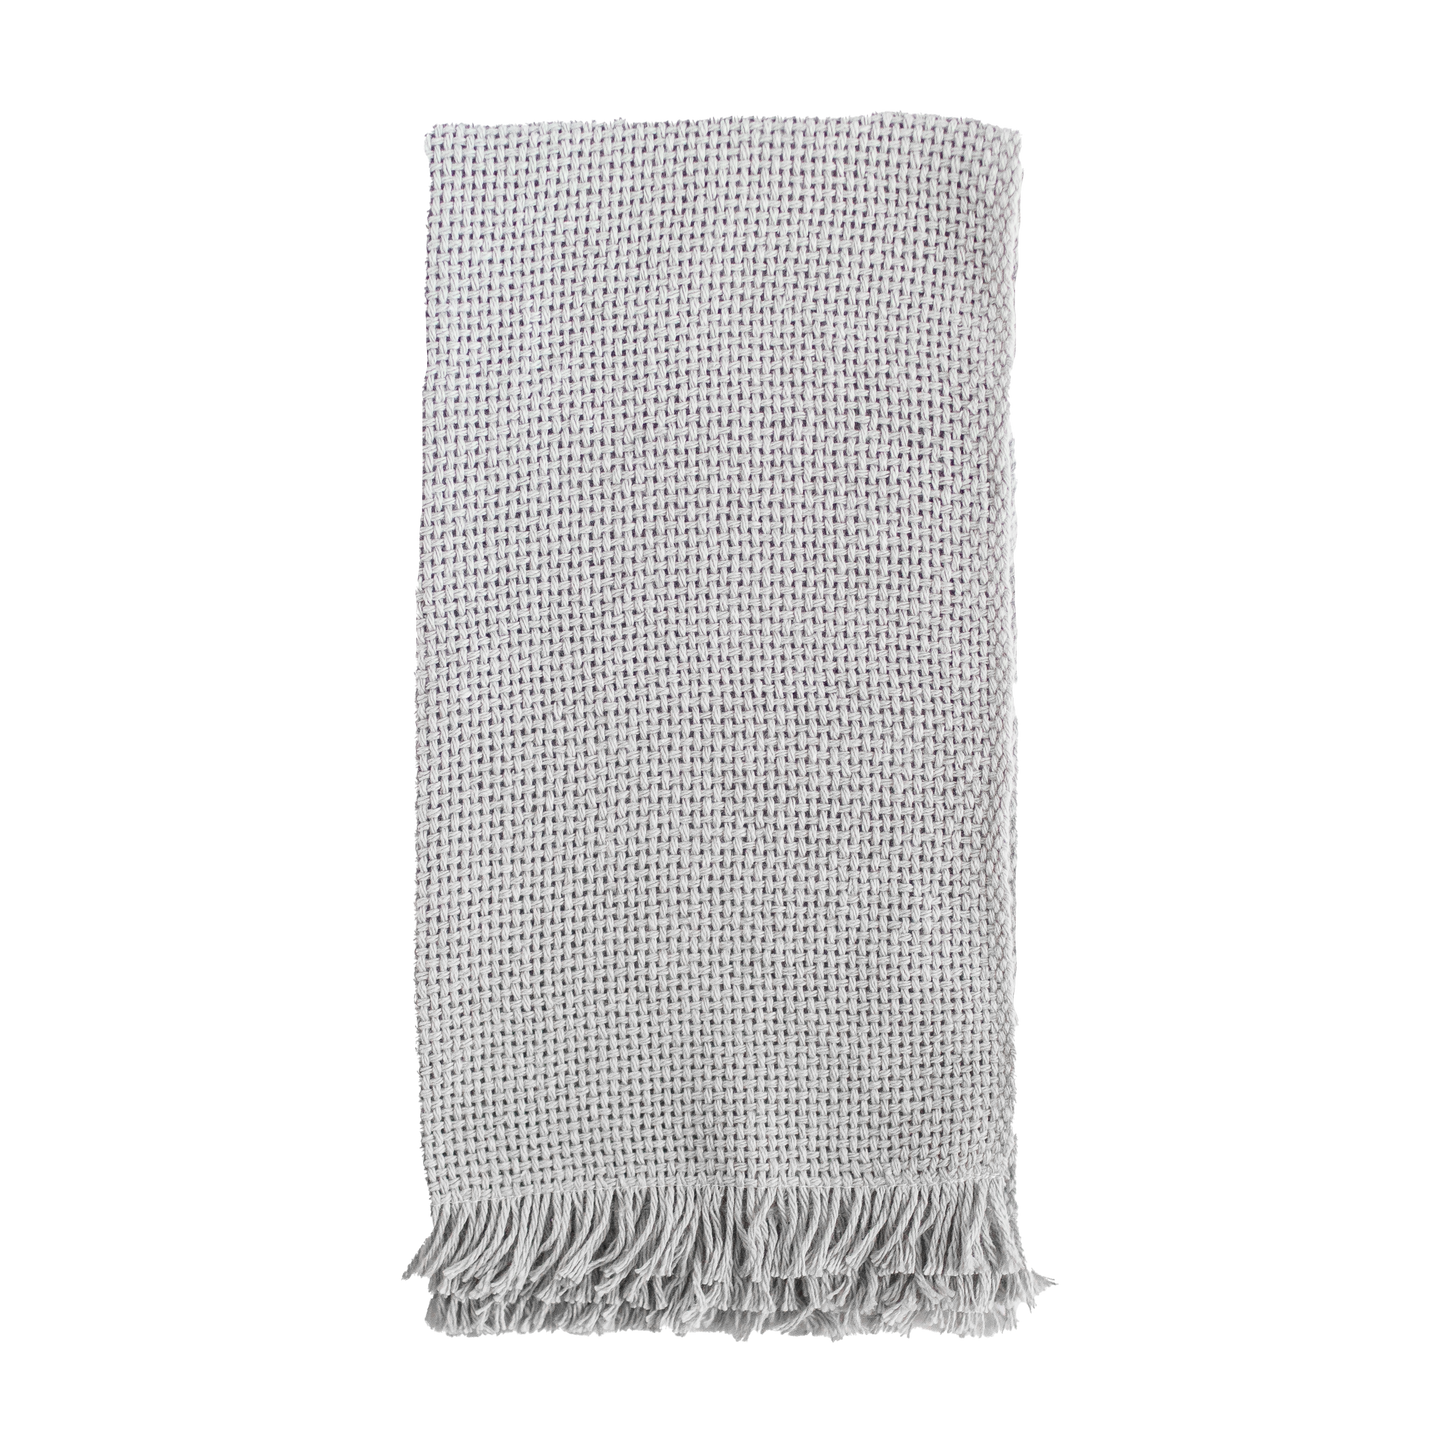 Folded greige hand towel